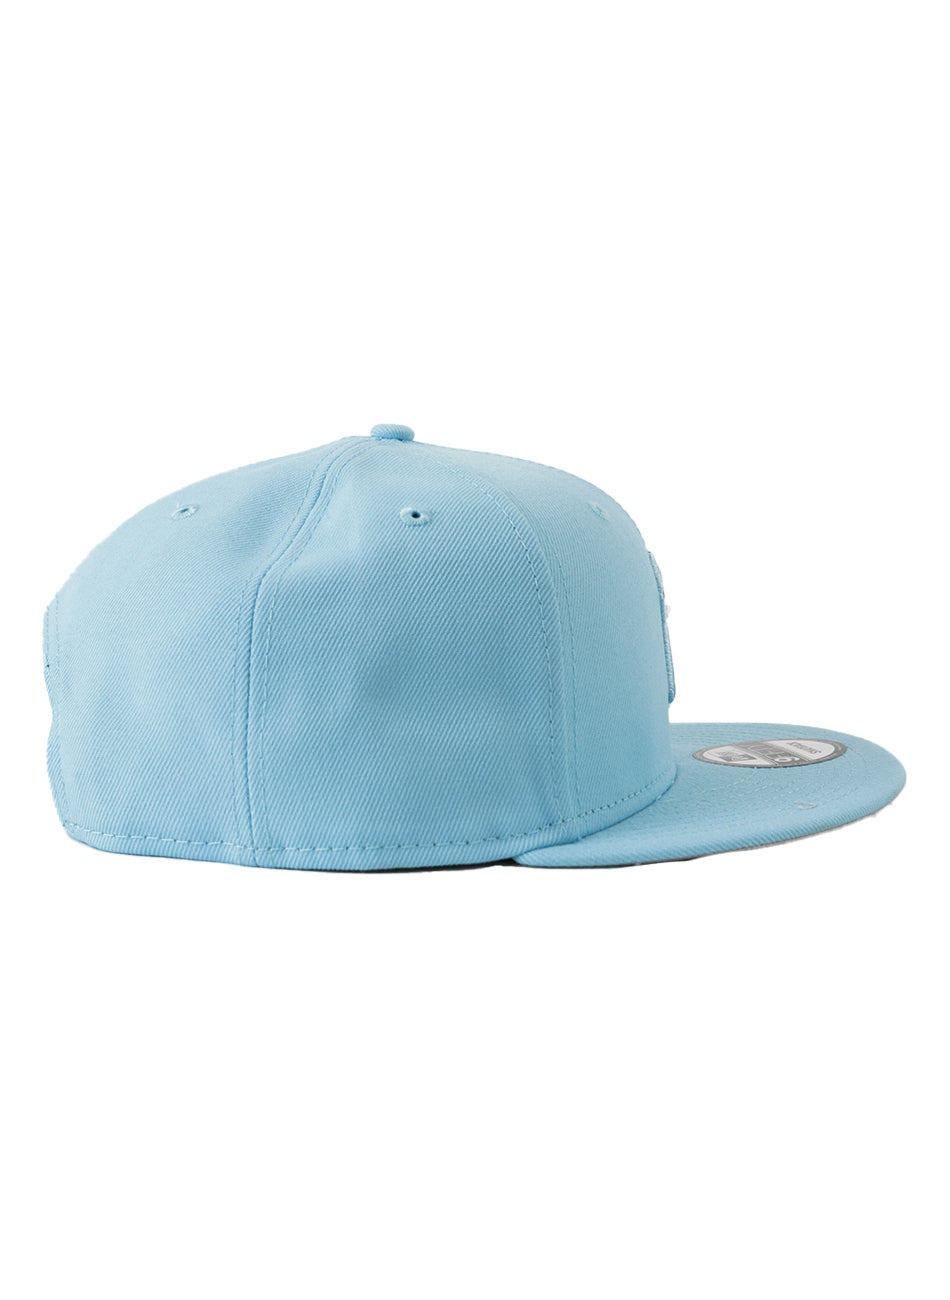 Color Pack NY Yankees Snap-Back Hat - Light Blue